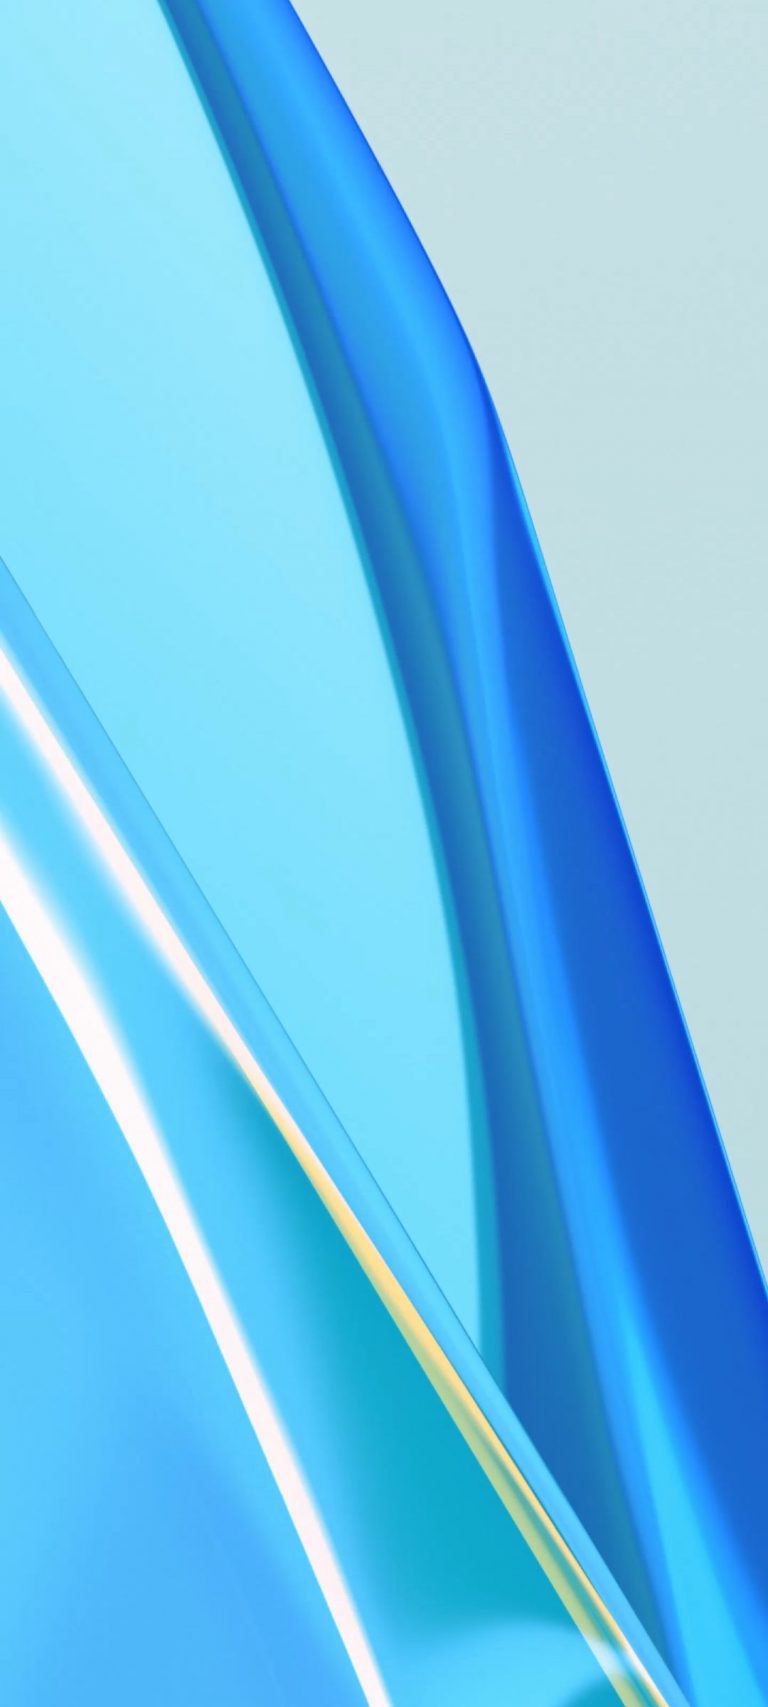 OnePlus 9 Pro Stock Wallpaper [1080x2400] - 008